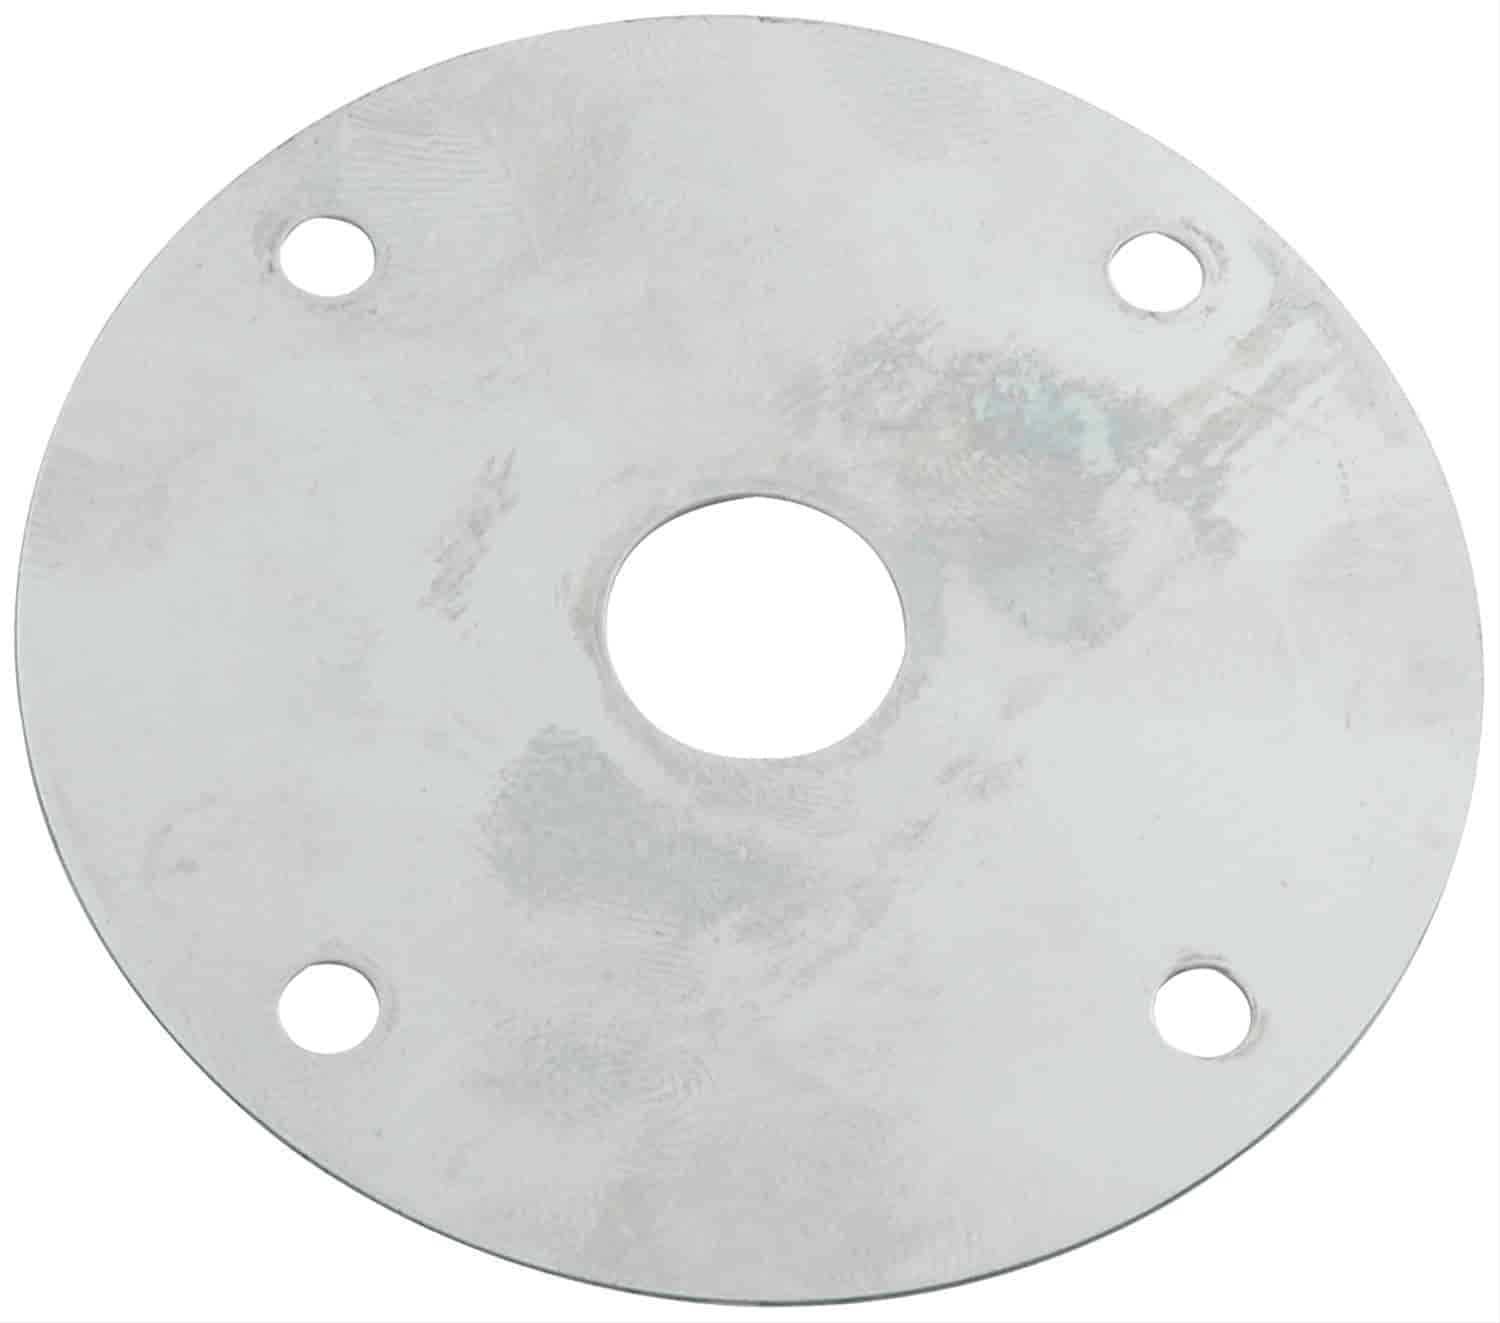 Hood Pin Scuff Plate - Chrome 1/2" Hole